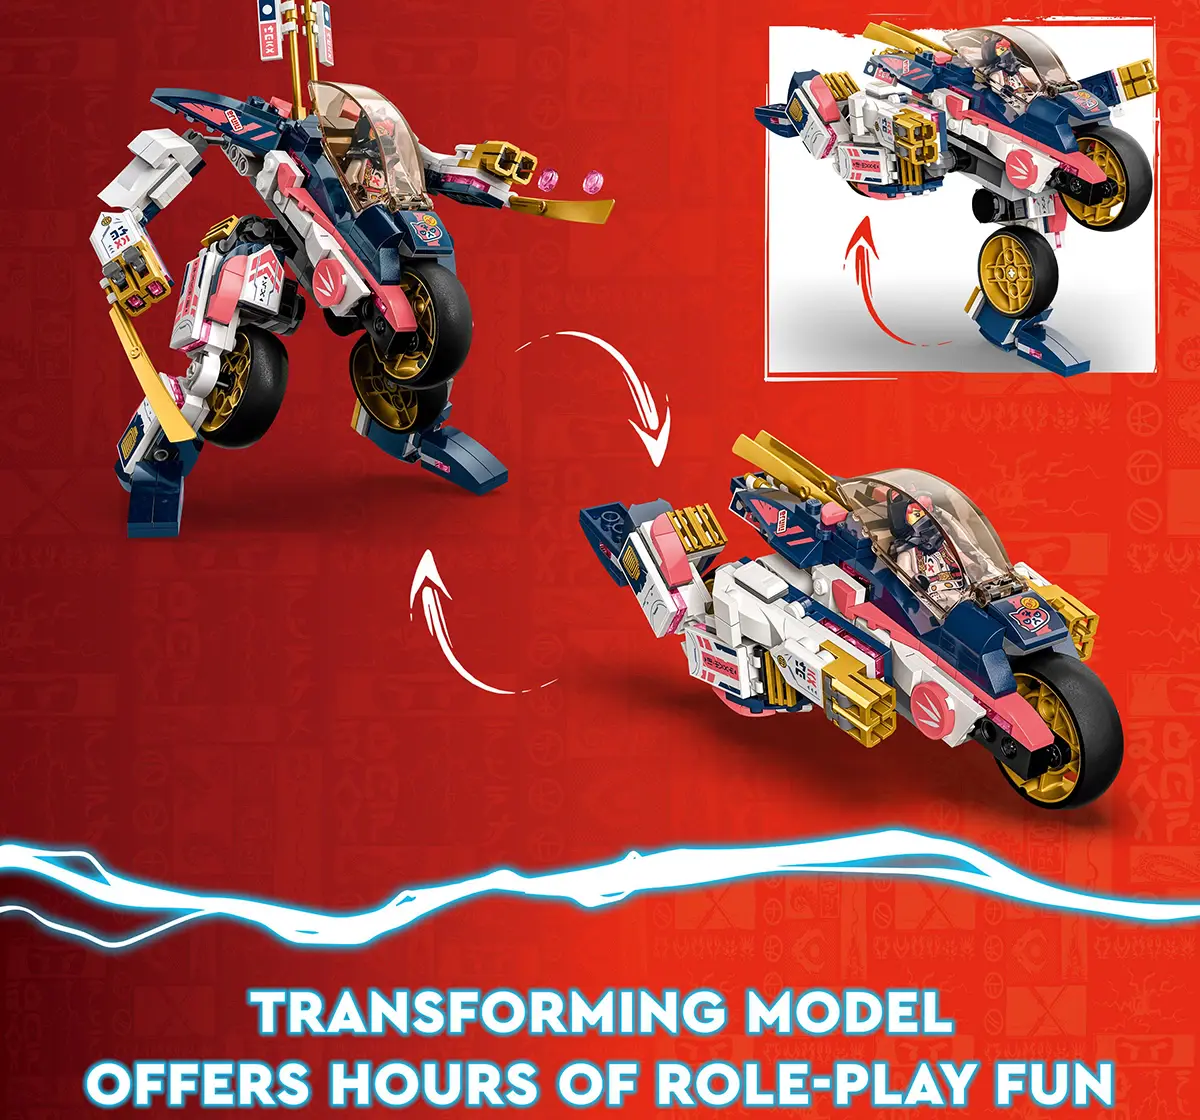 Lego Ninjago SoraS Transforming Mech Bike Racer 71792 Building Toy Set (384 Pcs), 8Y+